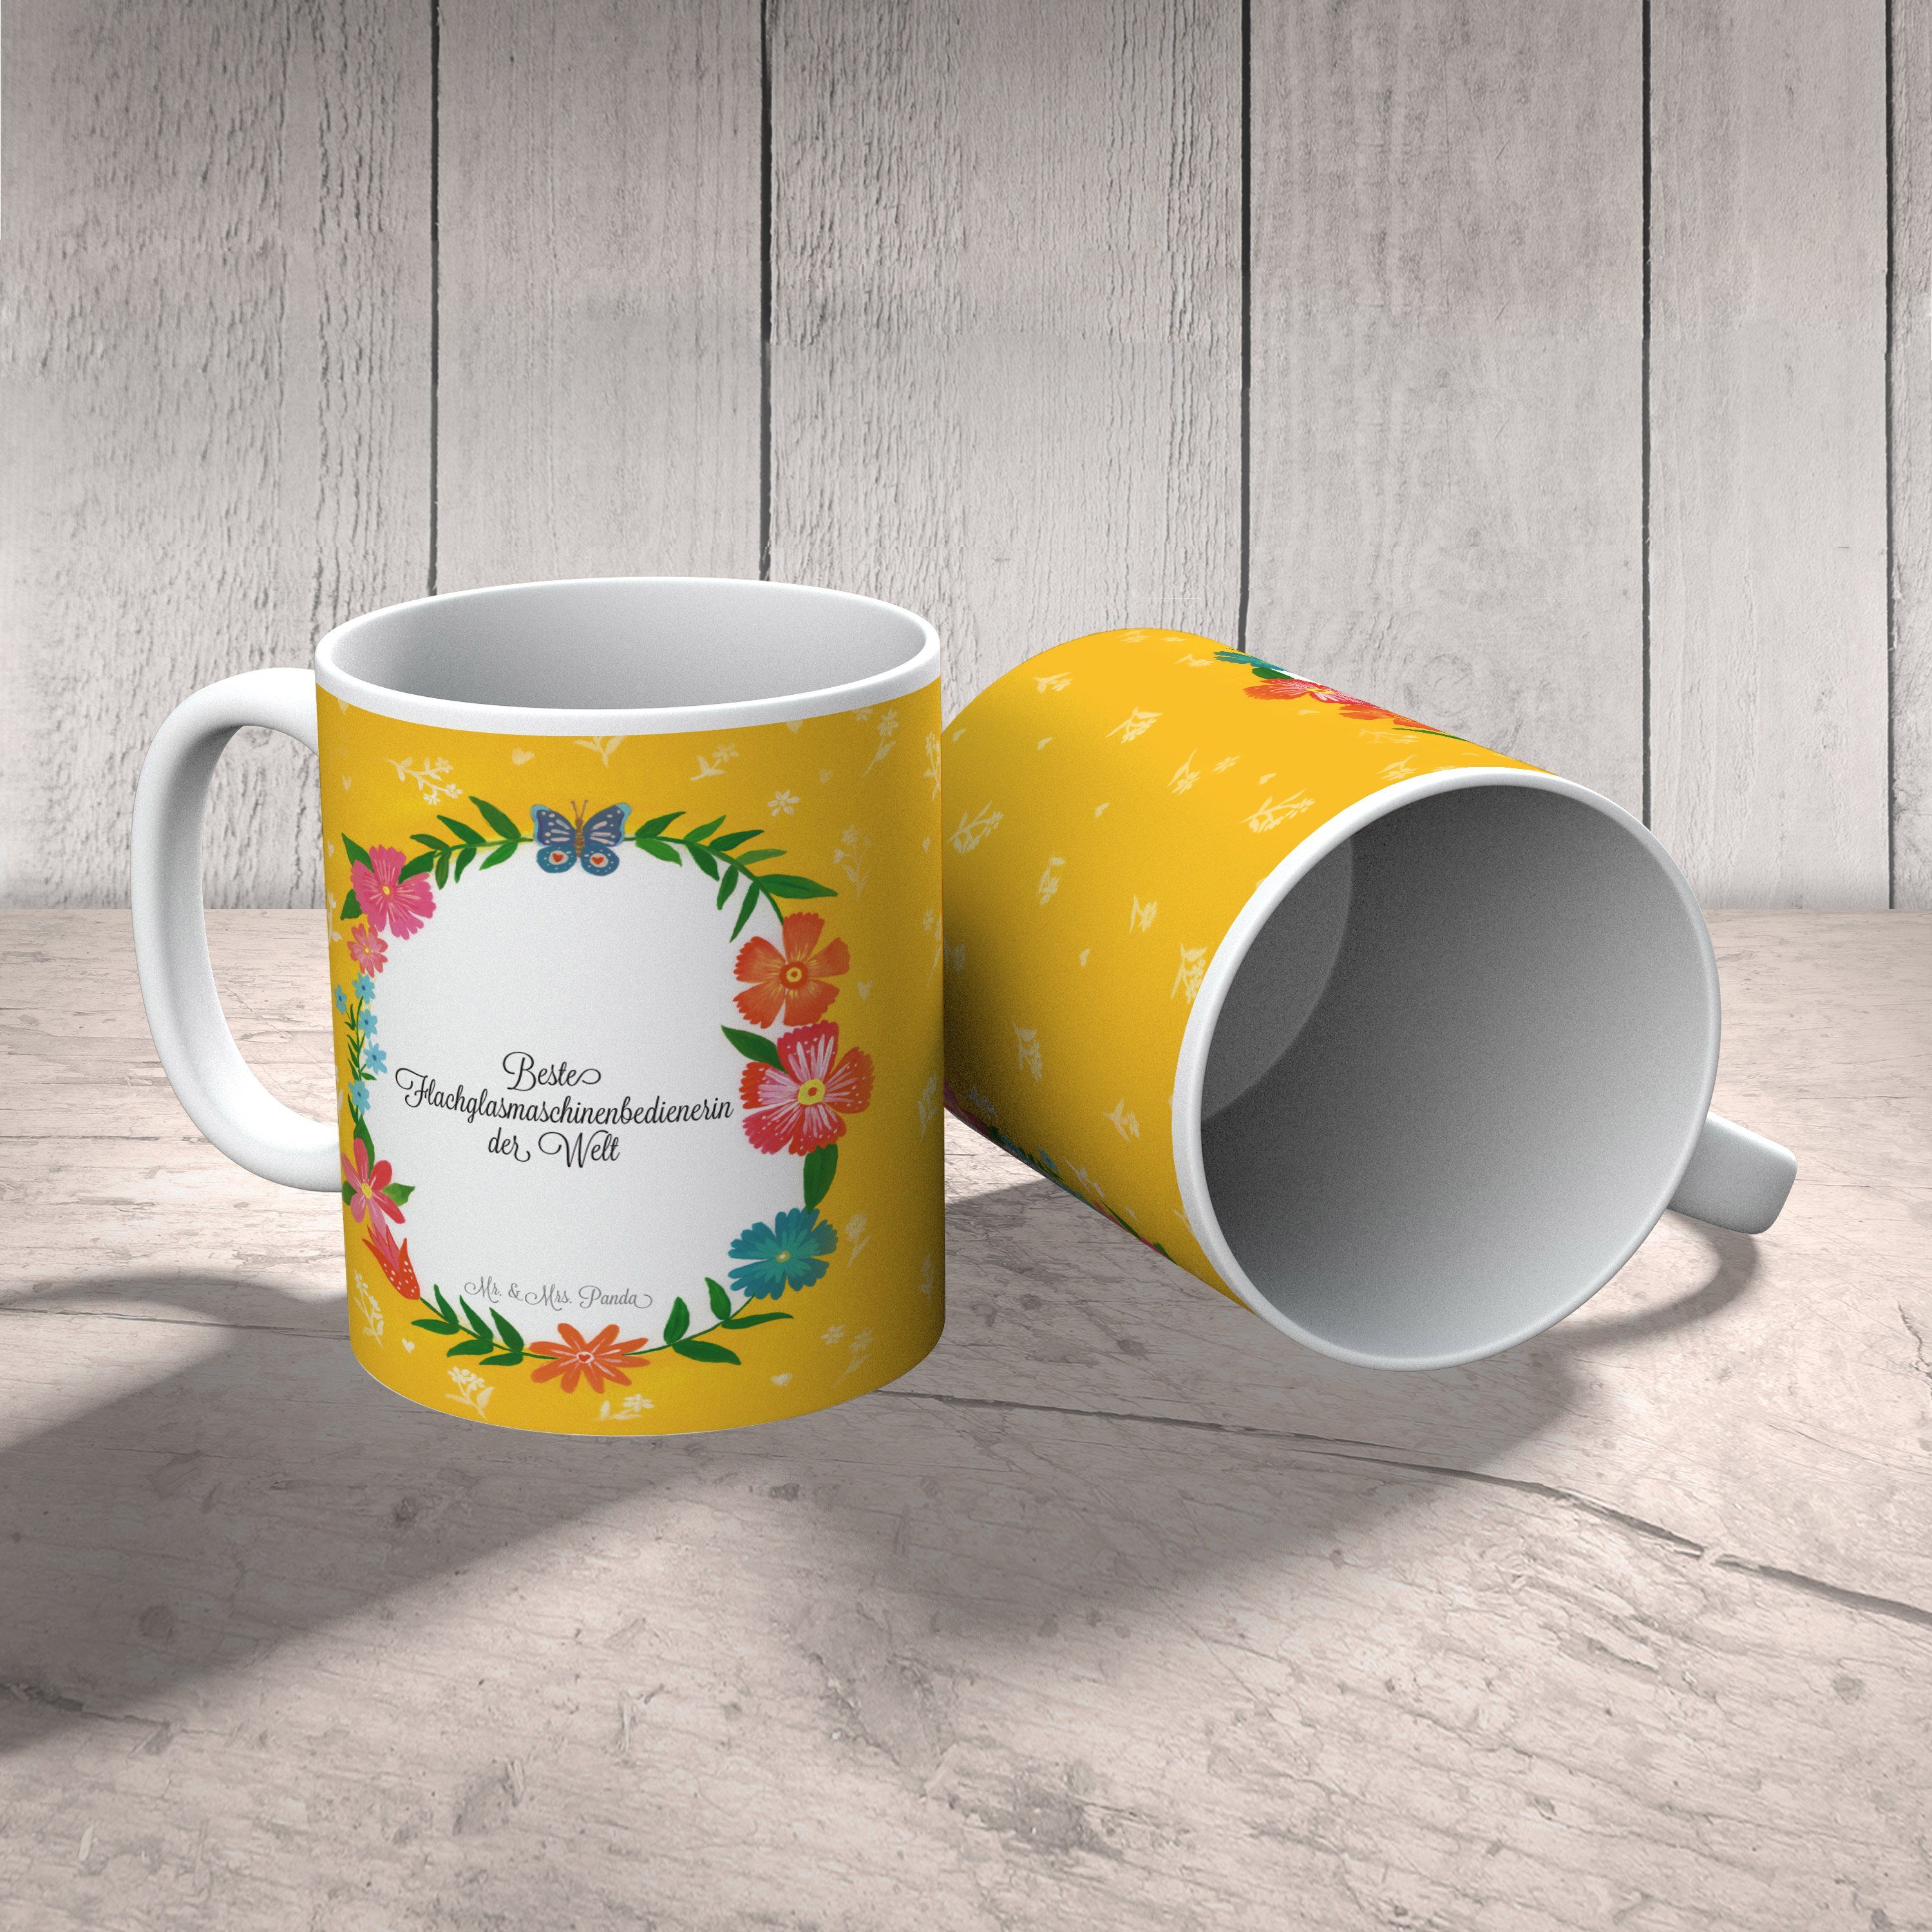 Mr. & Mrs. Geschenk, Tasse Tasse Keramik - Flachglasmaschinenbedienerin Panda Kaffeeb, Motive, Tasse